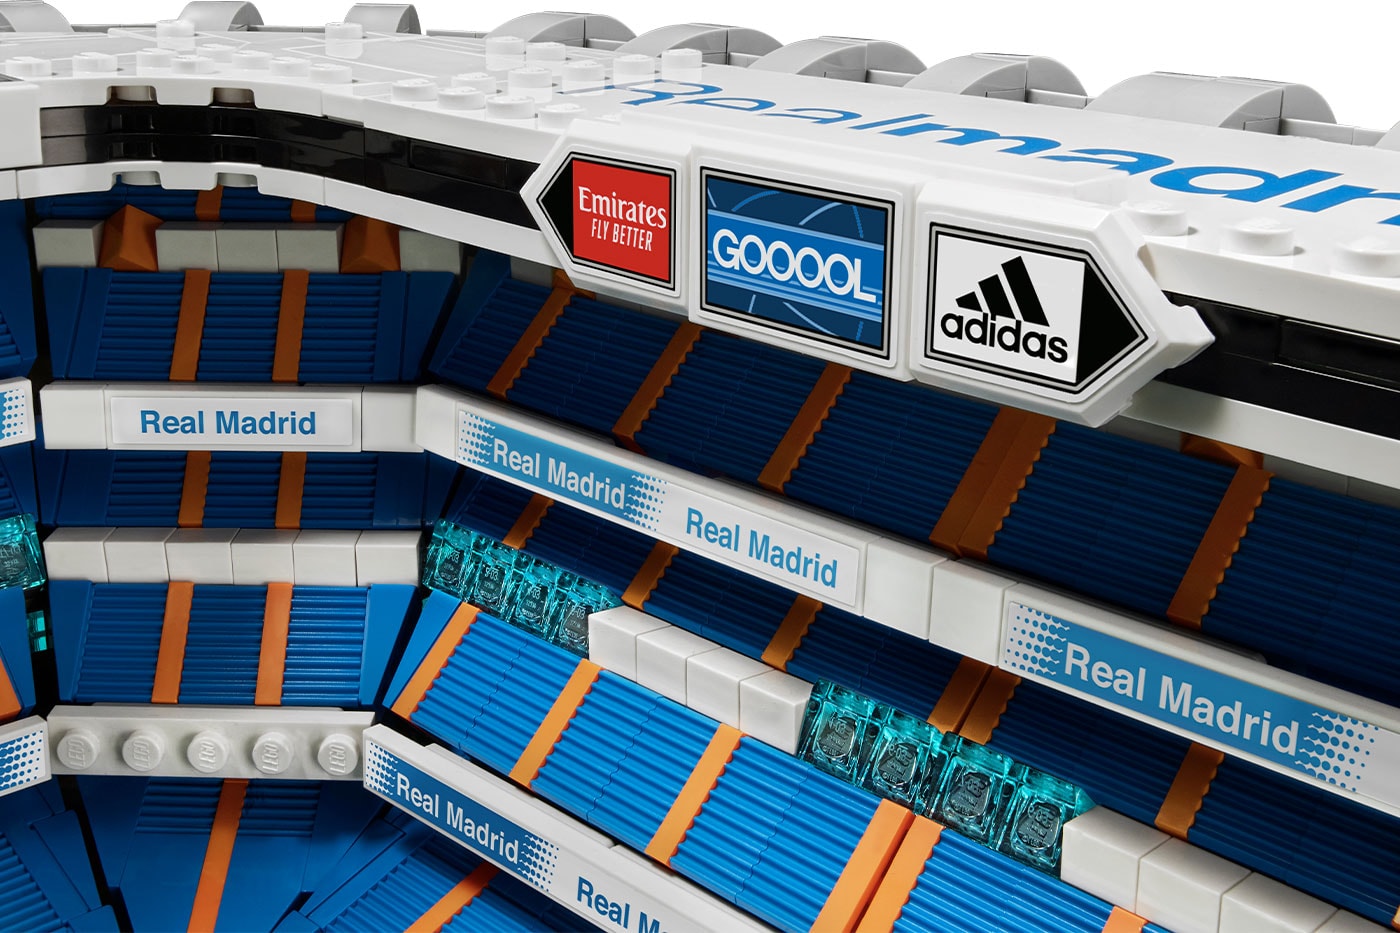 LEGO Real Madrid - Santiago Bernabéu Stadium